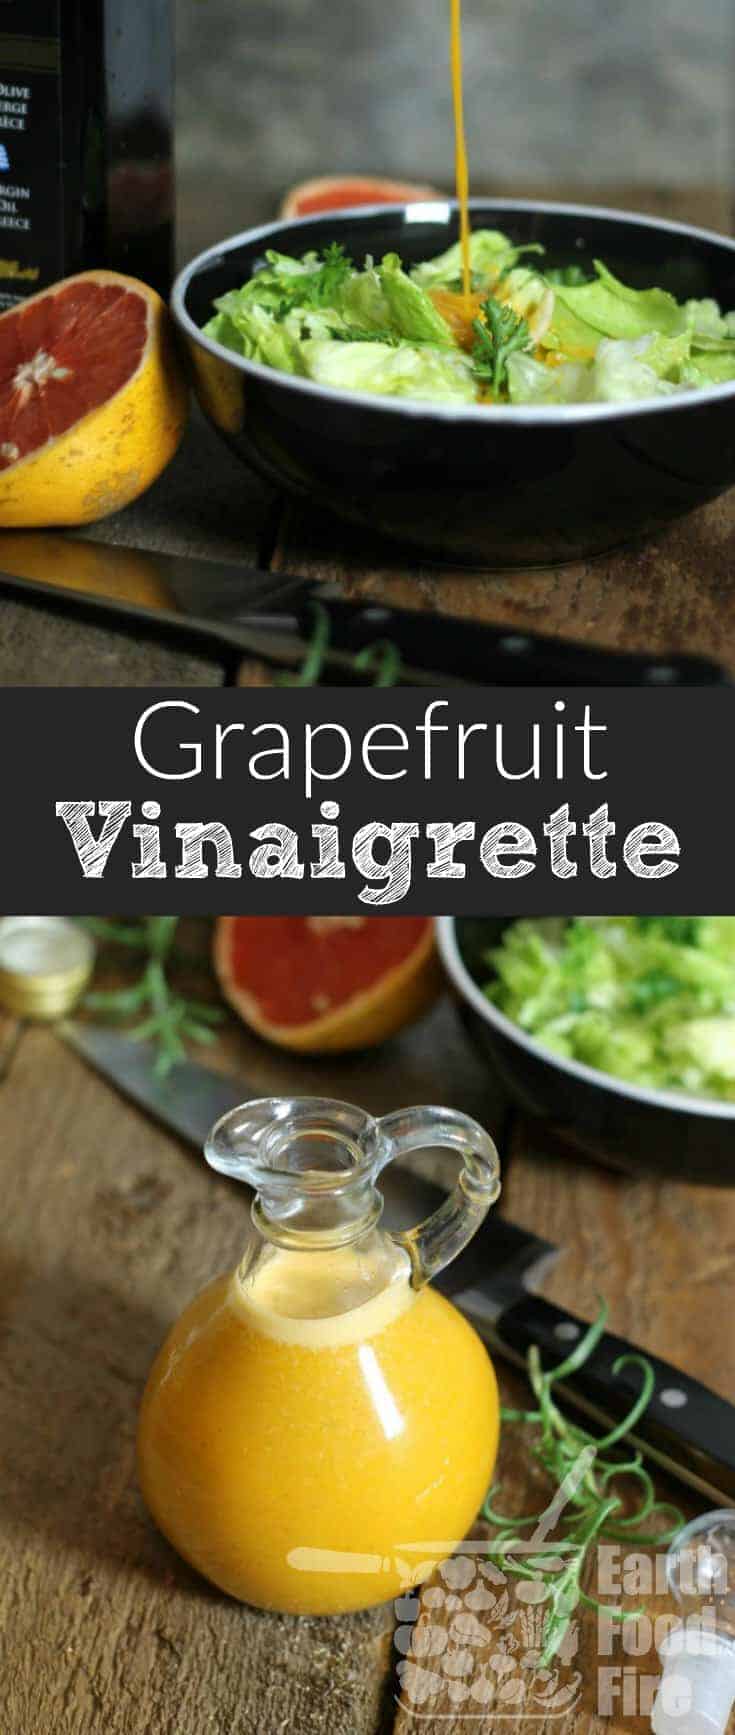 grapefruit vinaigrette